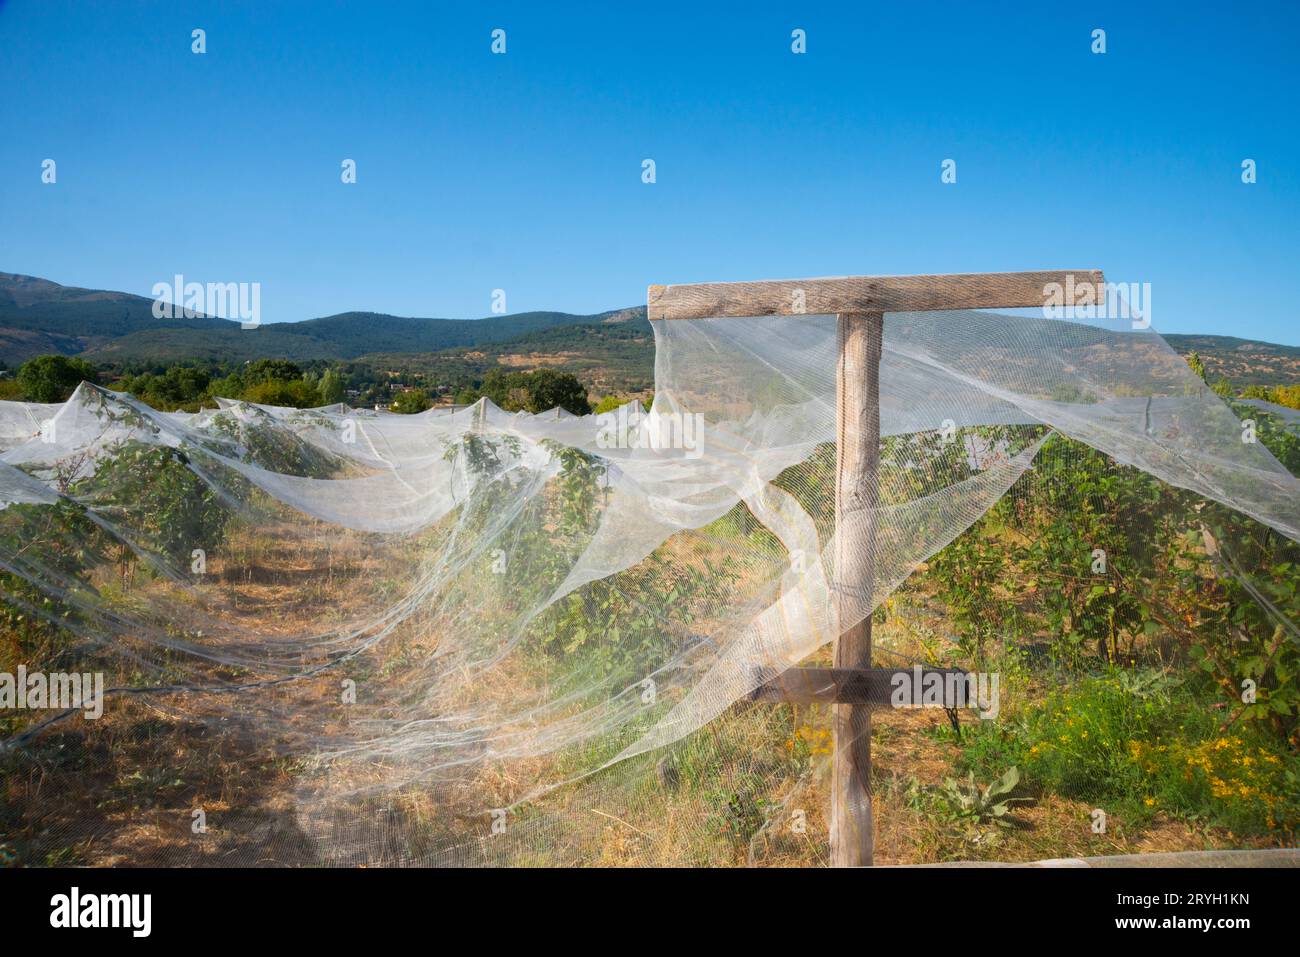 Blackberry plantation. Lozoya, Madrid province, Spain. Stock Photo